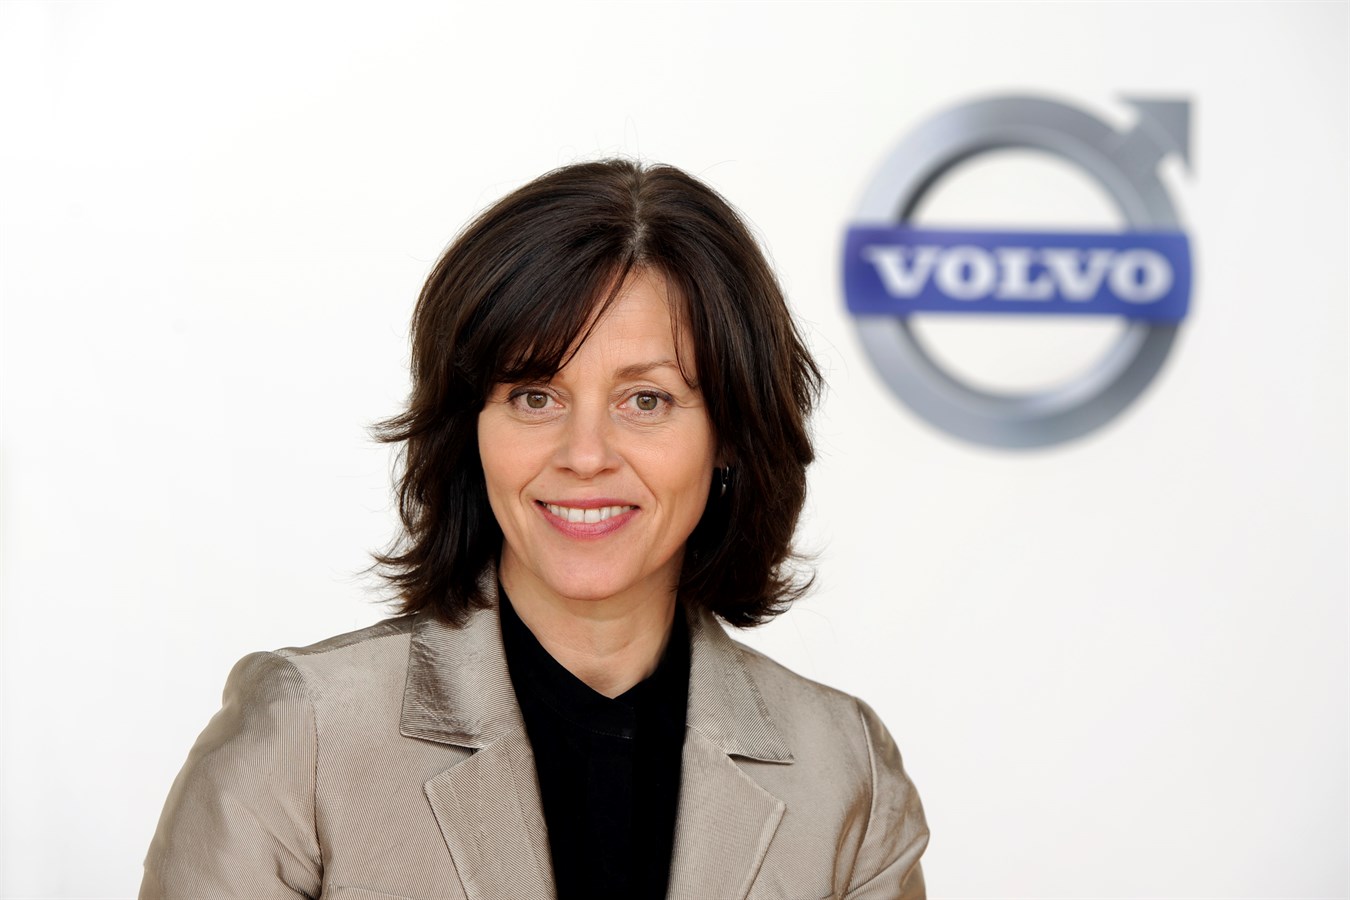 Bodil Eriksson, Executive Vice President Marketing, Brand & Communications, Volvo Cars North America per January 15, 2014